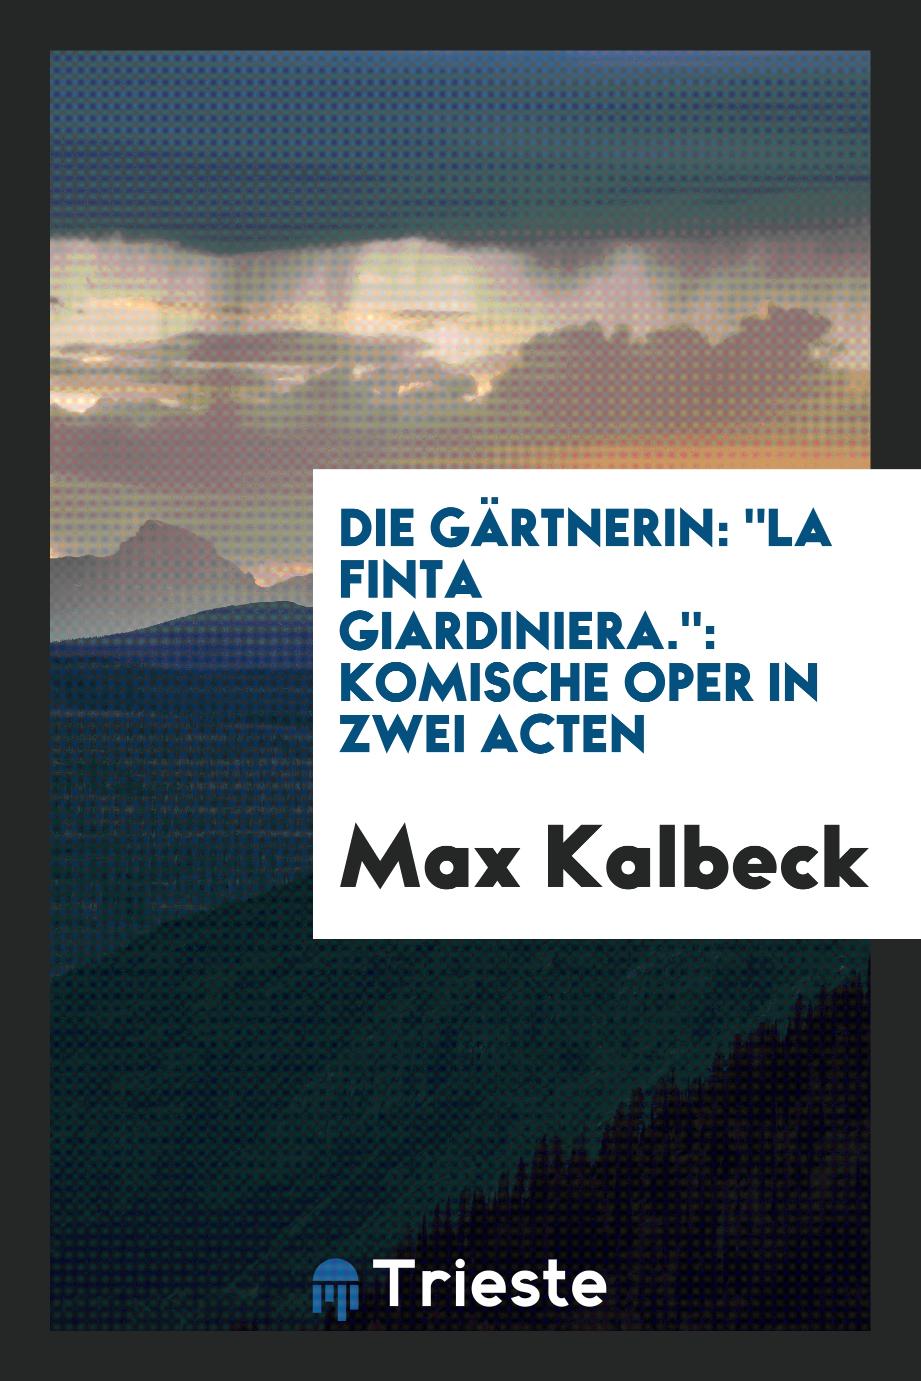 Max Kalbeck - Die Gärtnerin: "la finta giardiniera.": komische Oper in zwei Acten